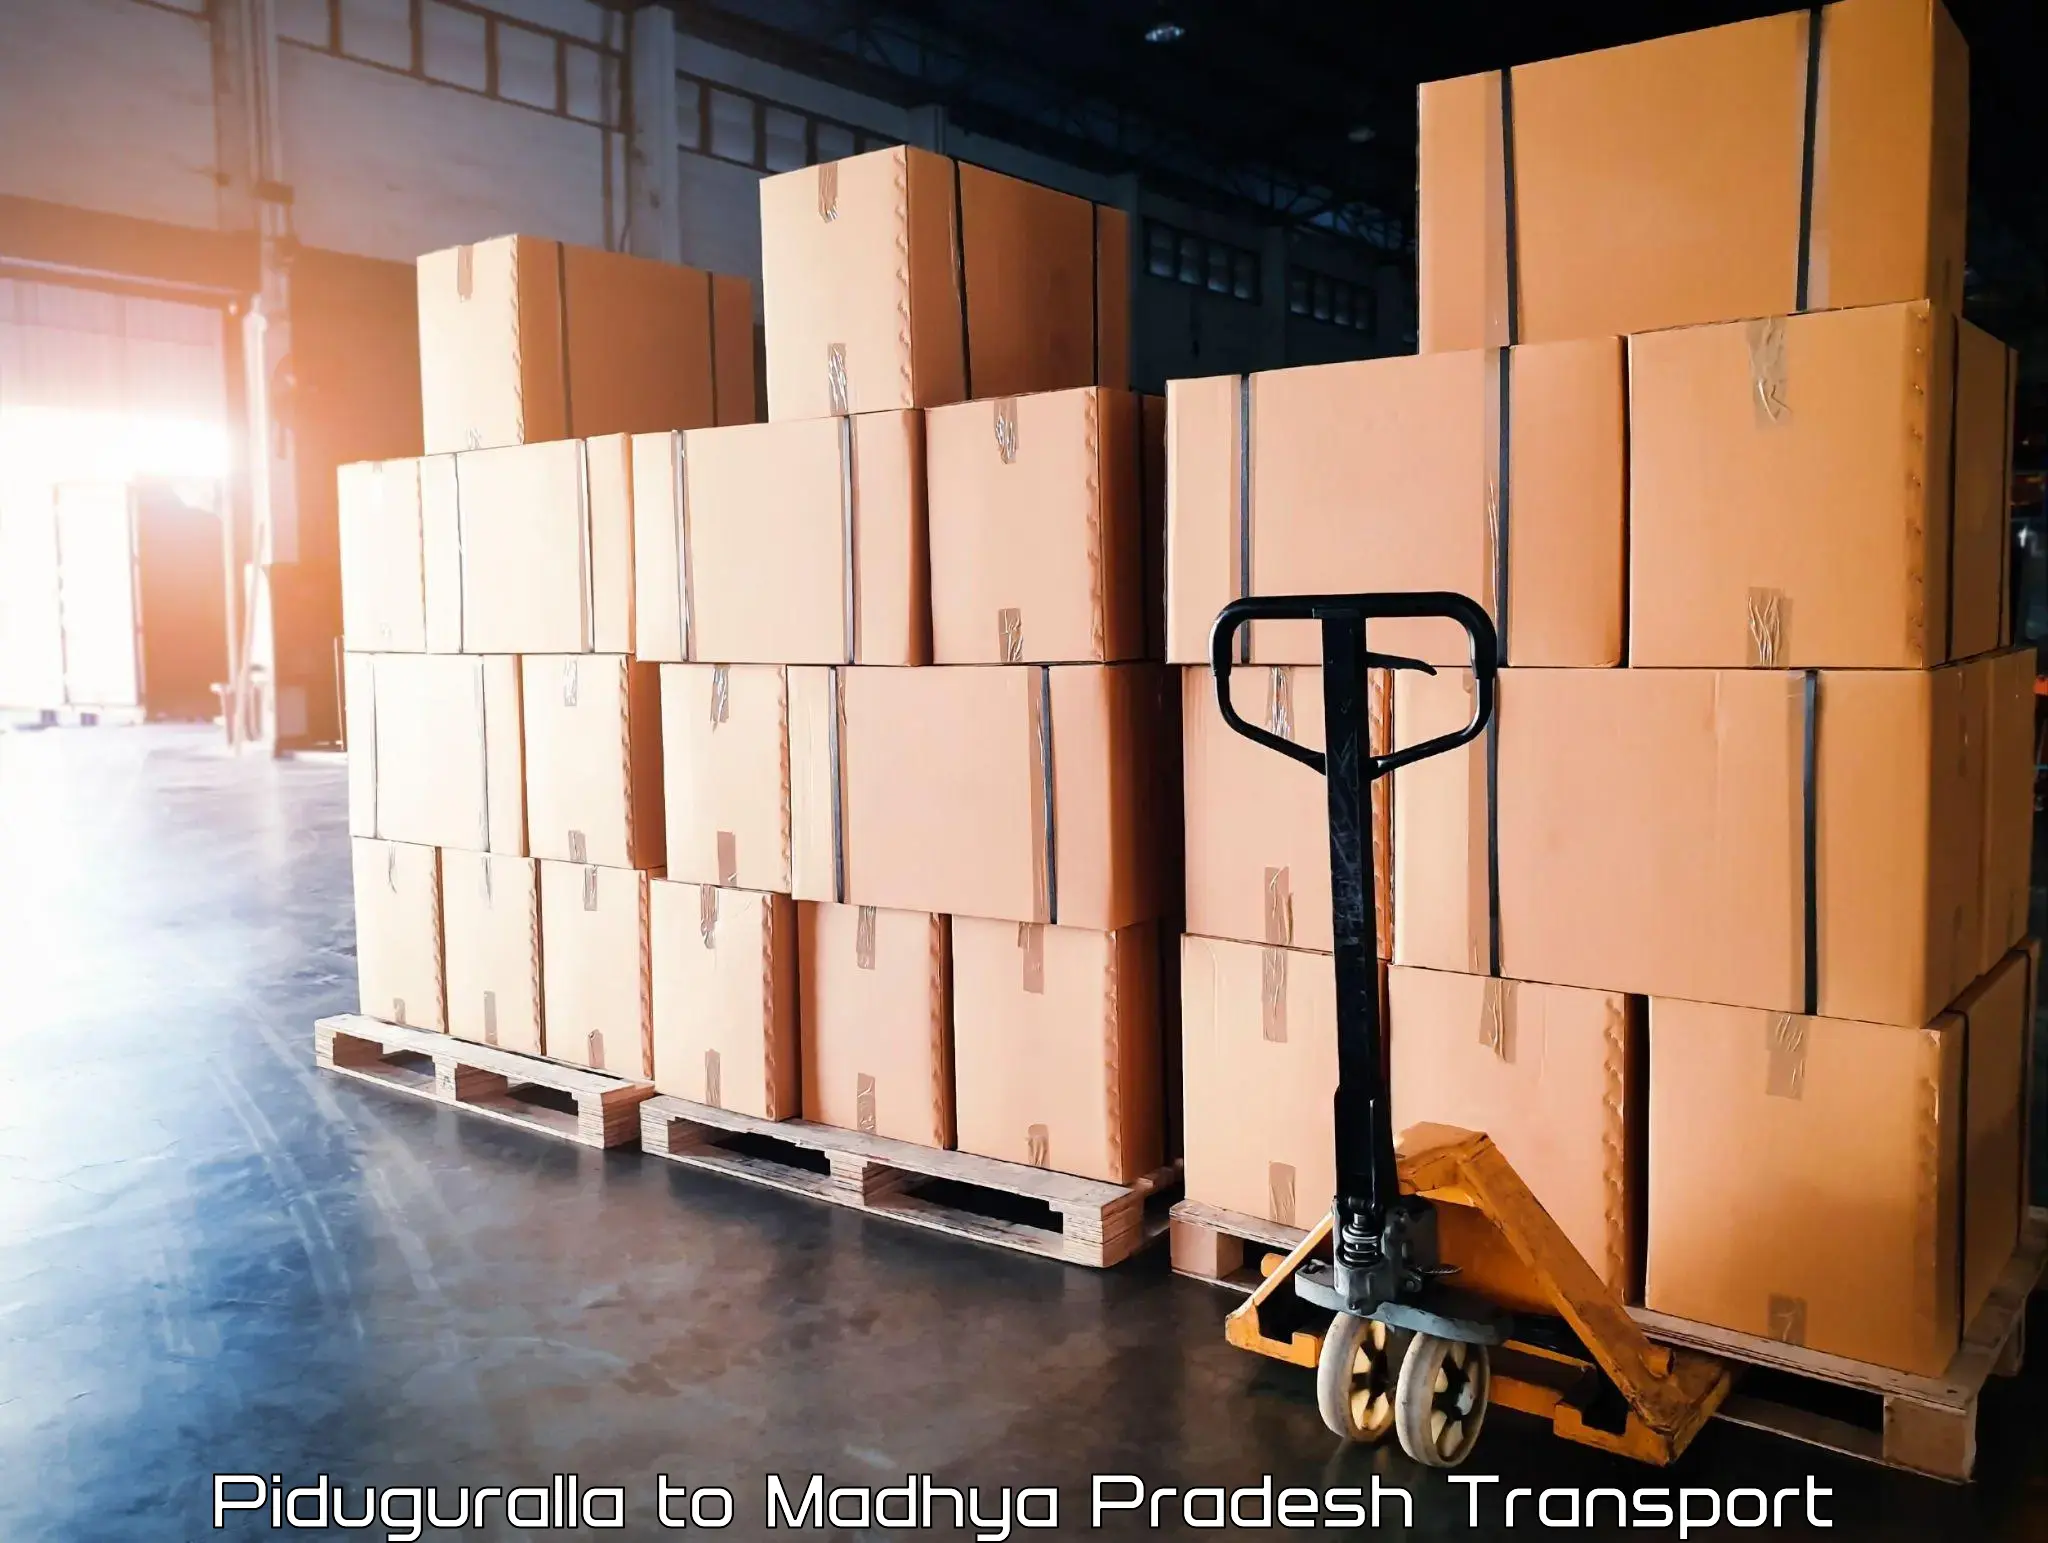 Goods delivery service Piduguralla to Morar